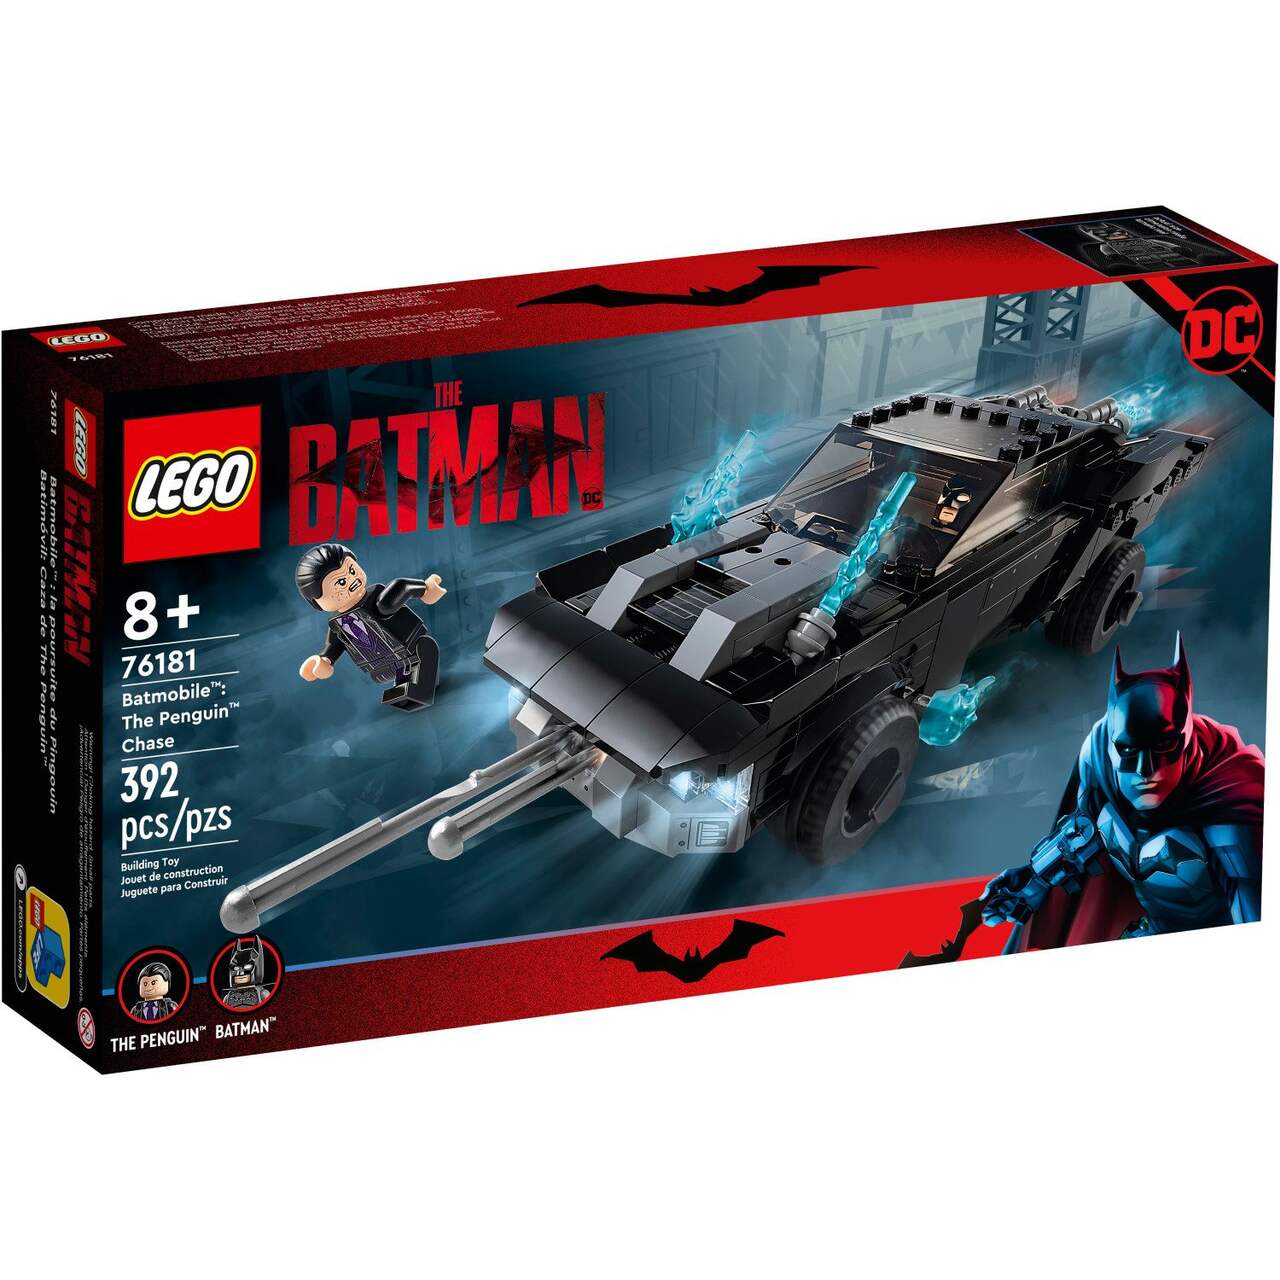 LEGO® DC Batman™ Batmobile: The Penguin™ Chase - 76181,392 pcs